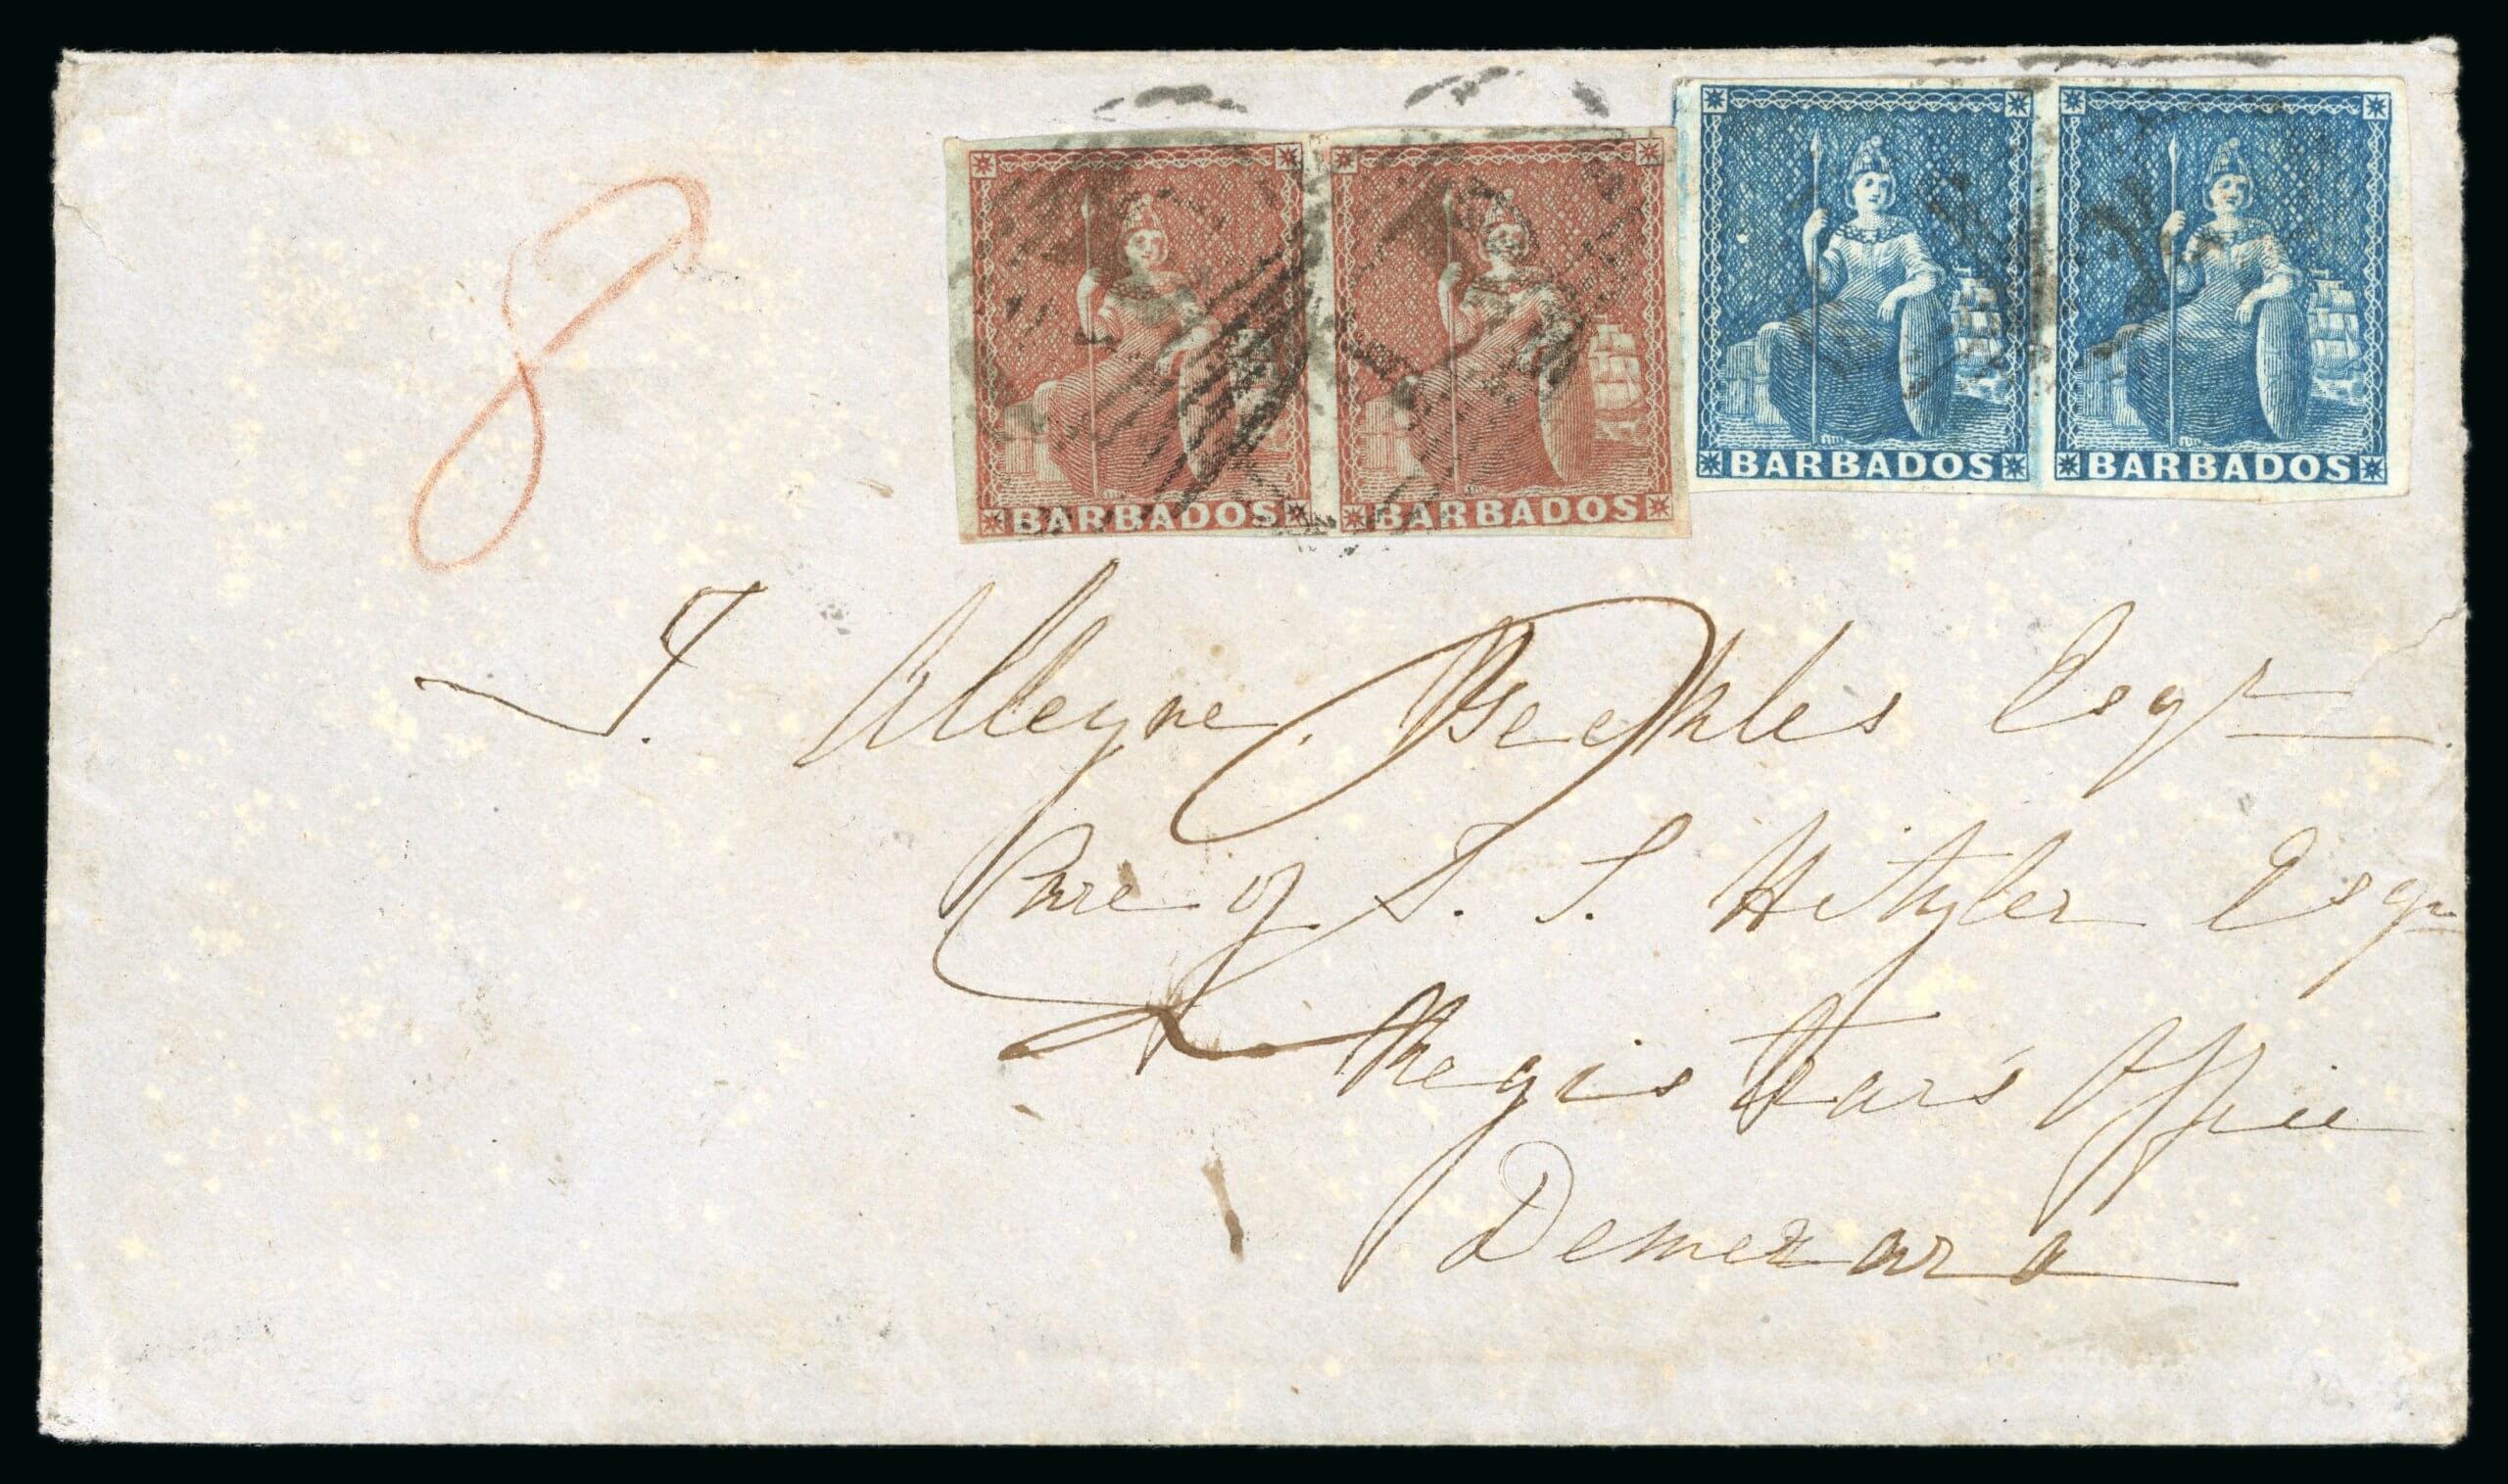 Lot 40558 - 1860 (Jun 19) envelope from Bridgetown to British Guiana